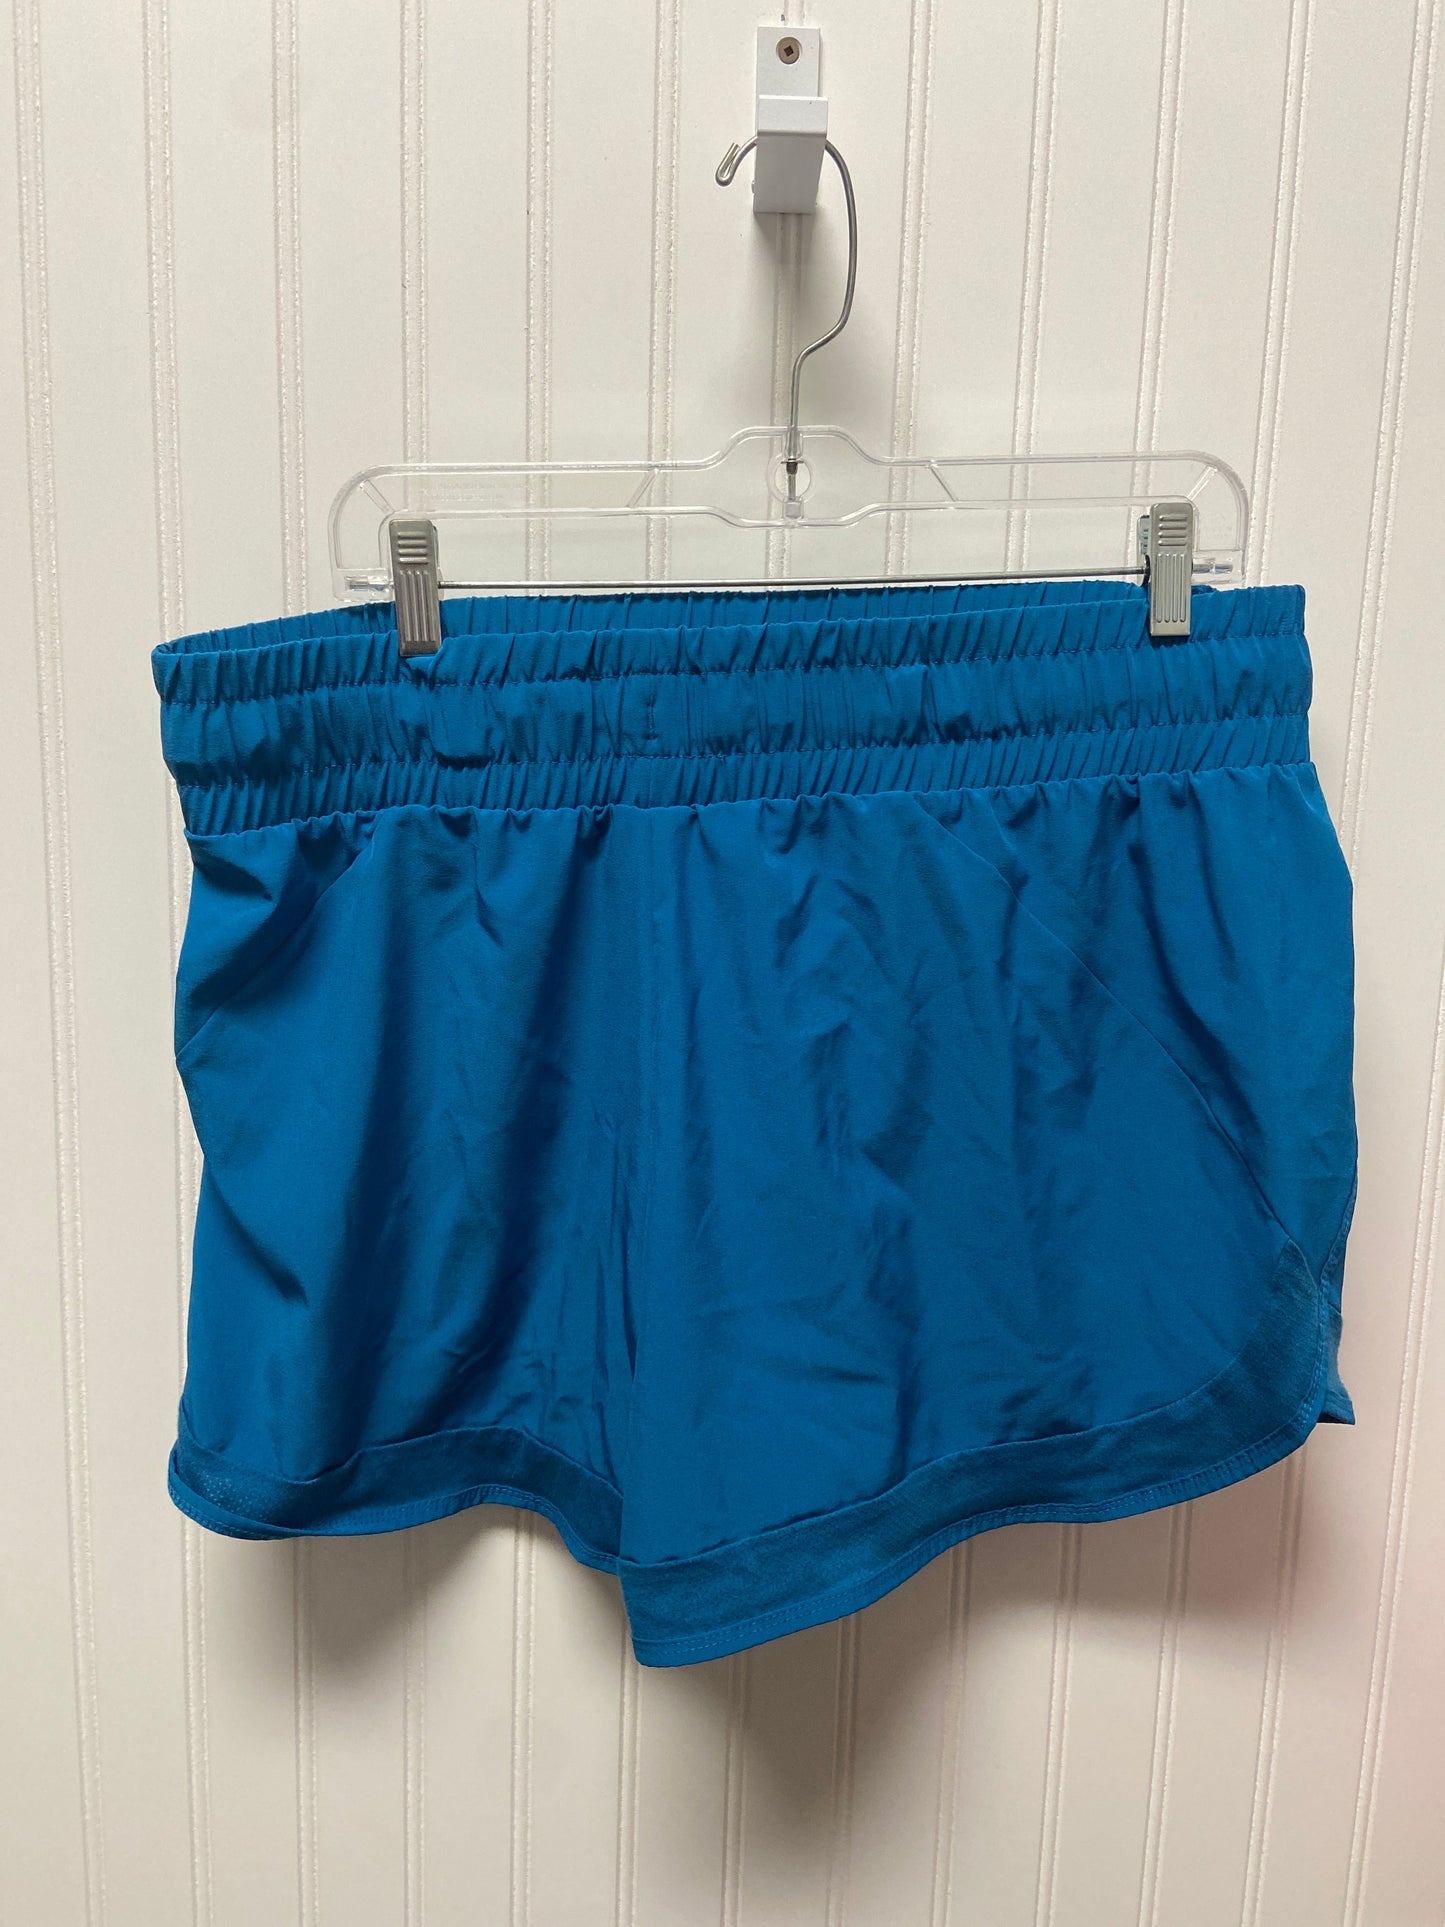 Athletic Shorts By Reebok  Size: Xxl